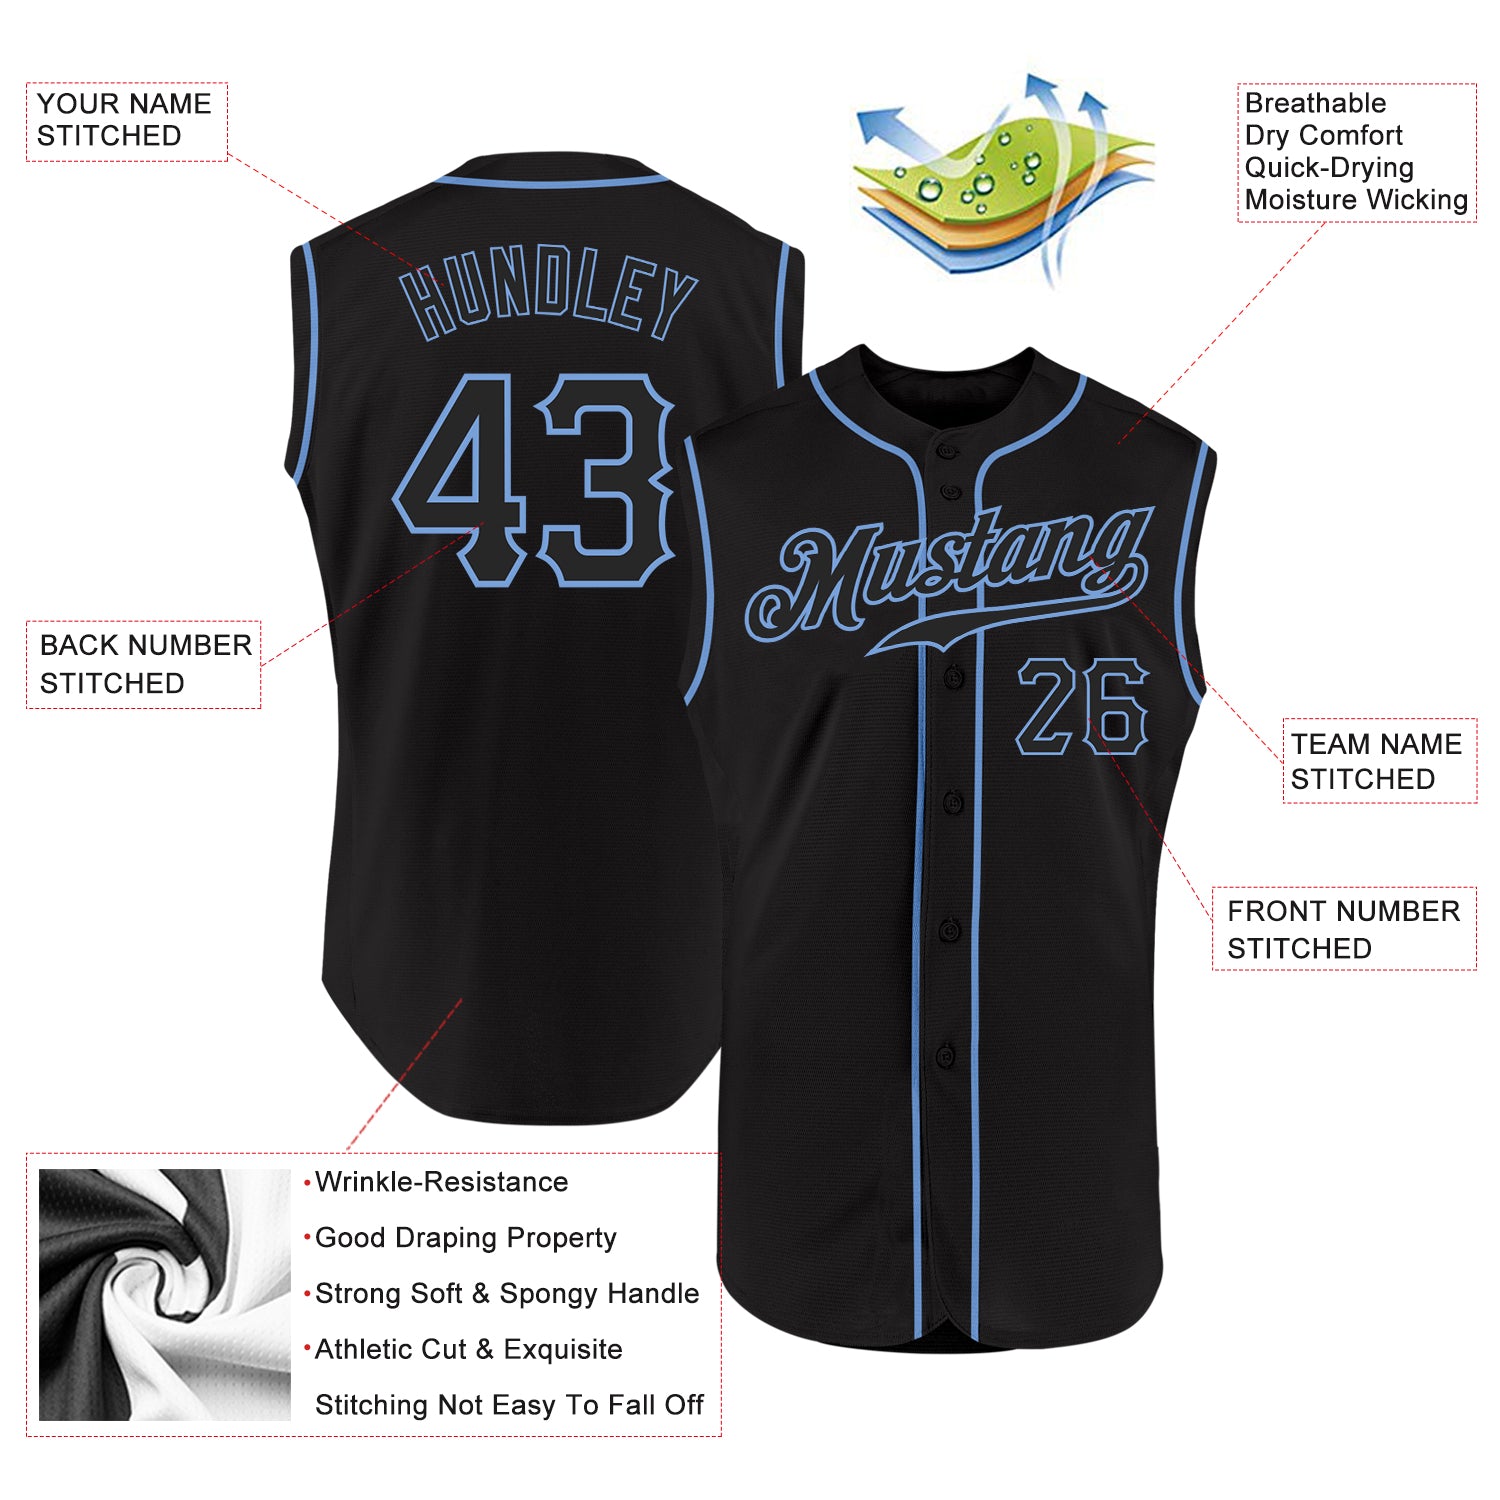 Custom Black Black-Light Blue Authentic Sleeveless Baseball Jersey